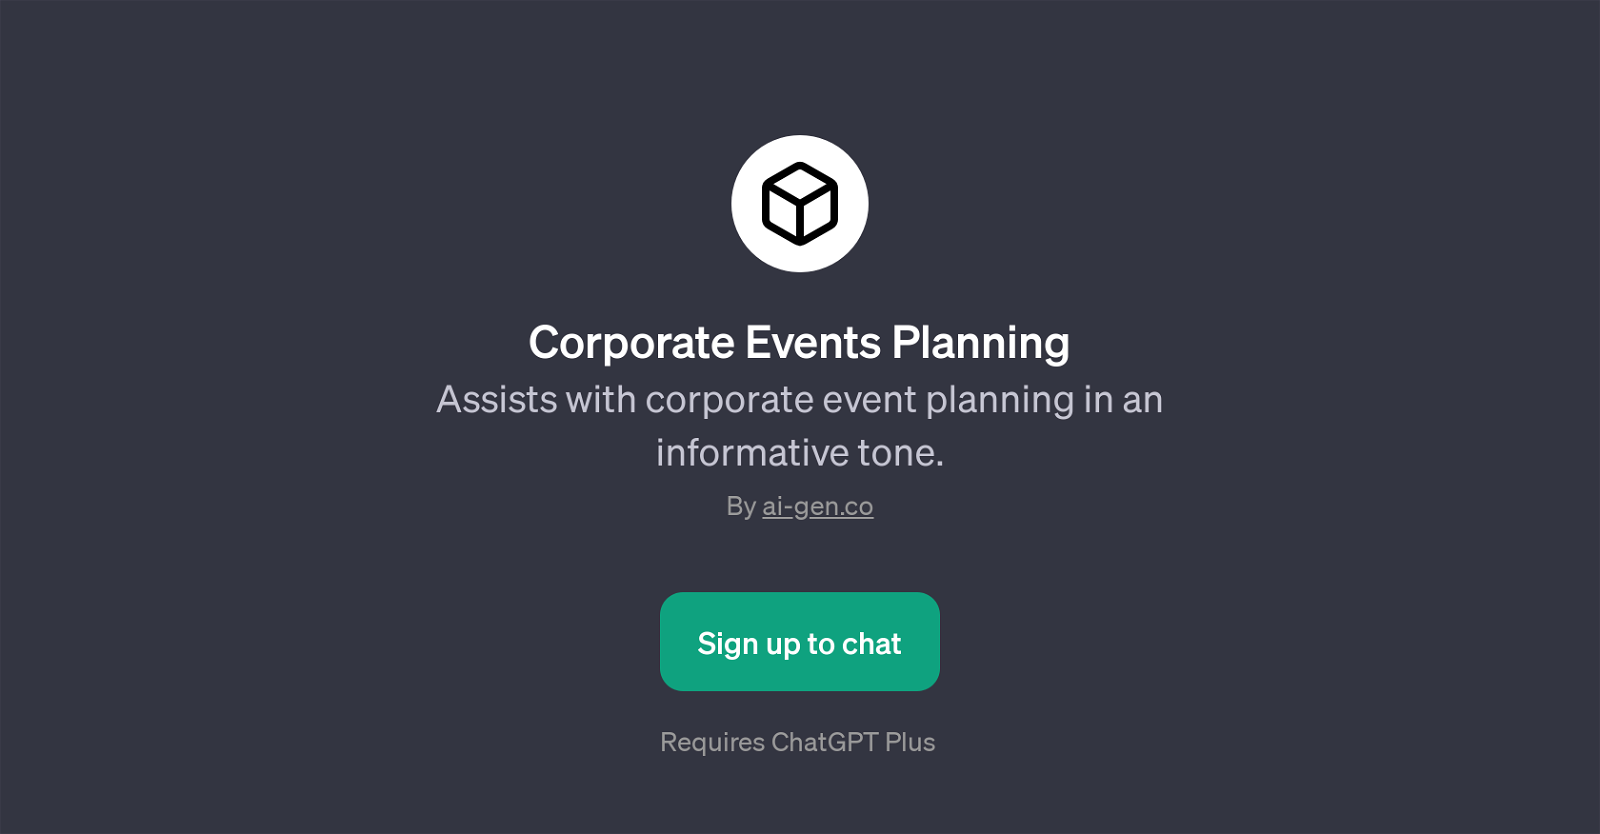 Corporate Events Planning website